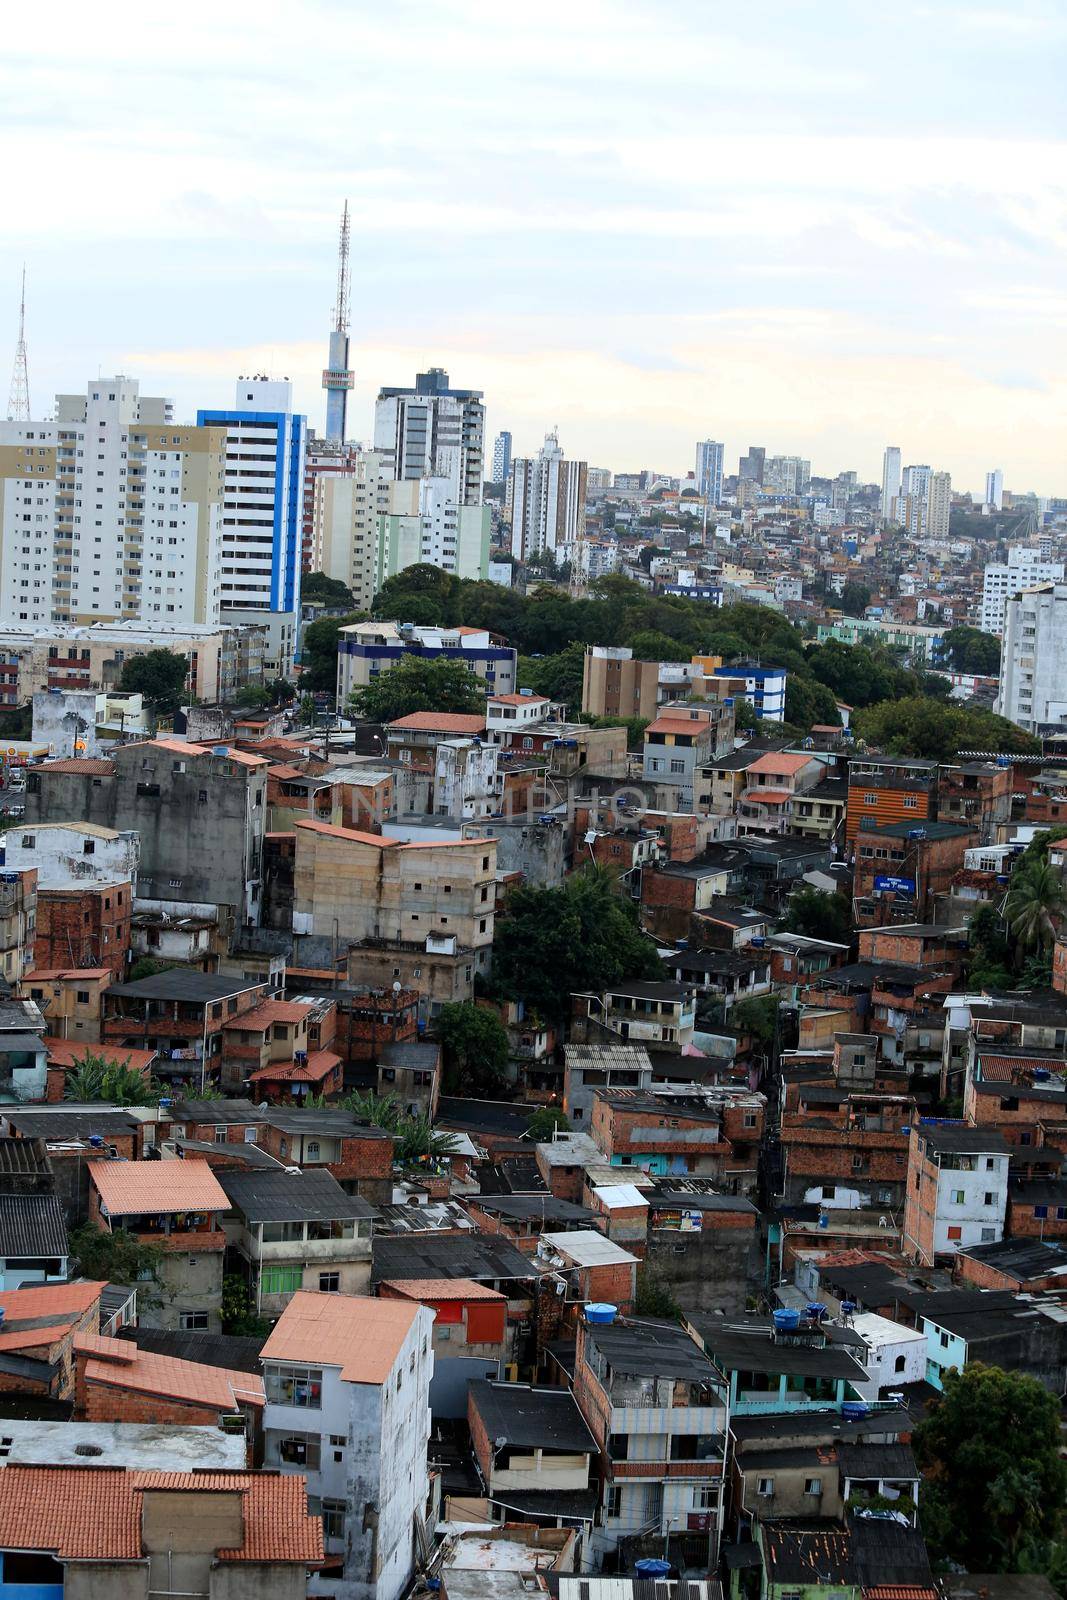 slum dwellings in the city of Salvador by joasouza